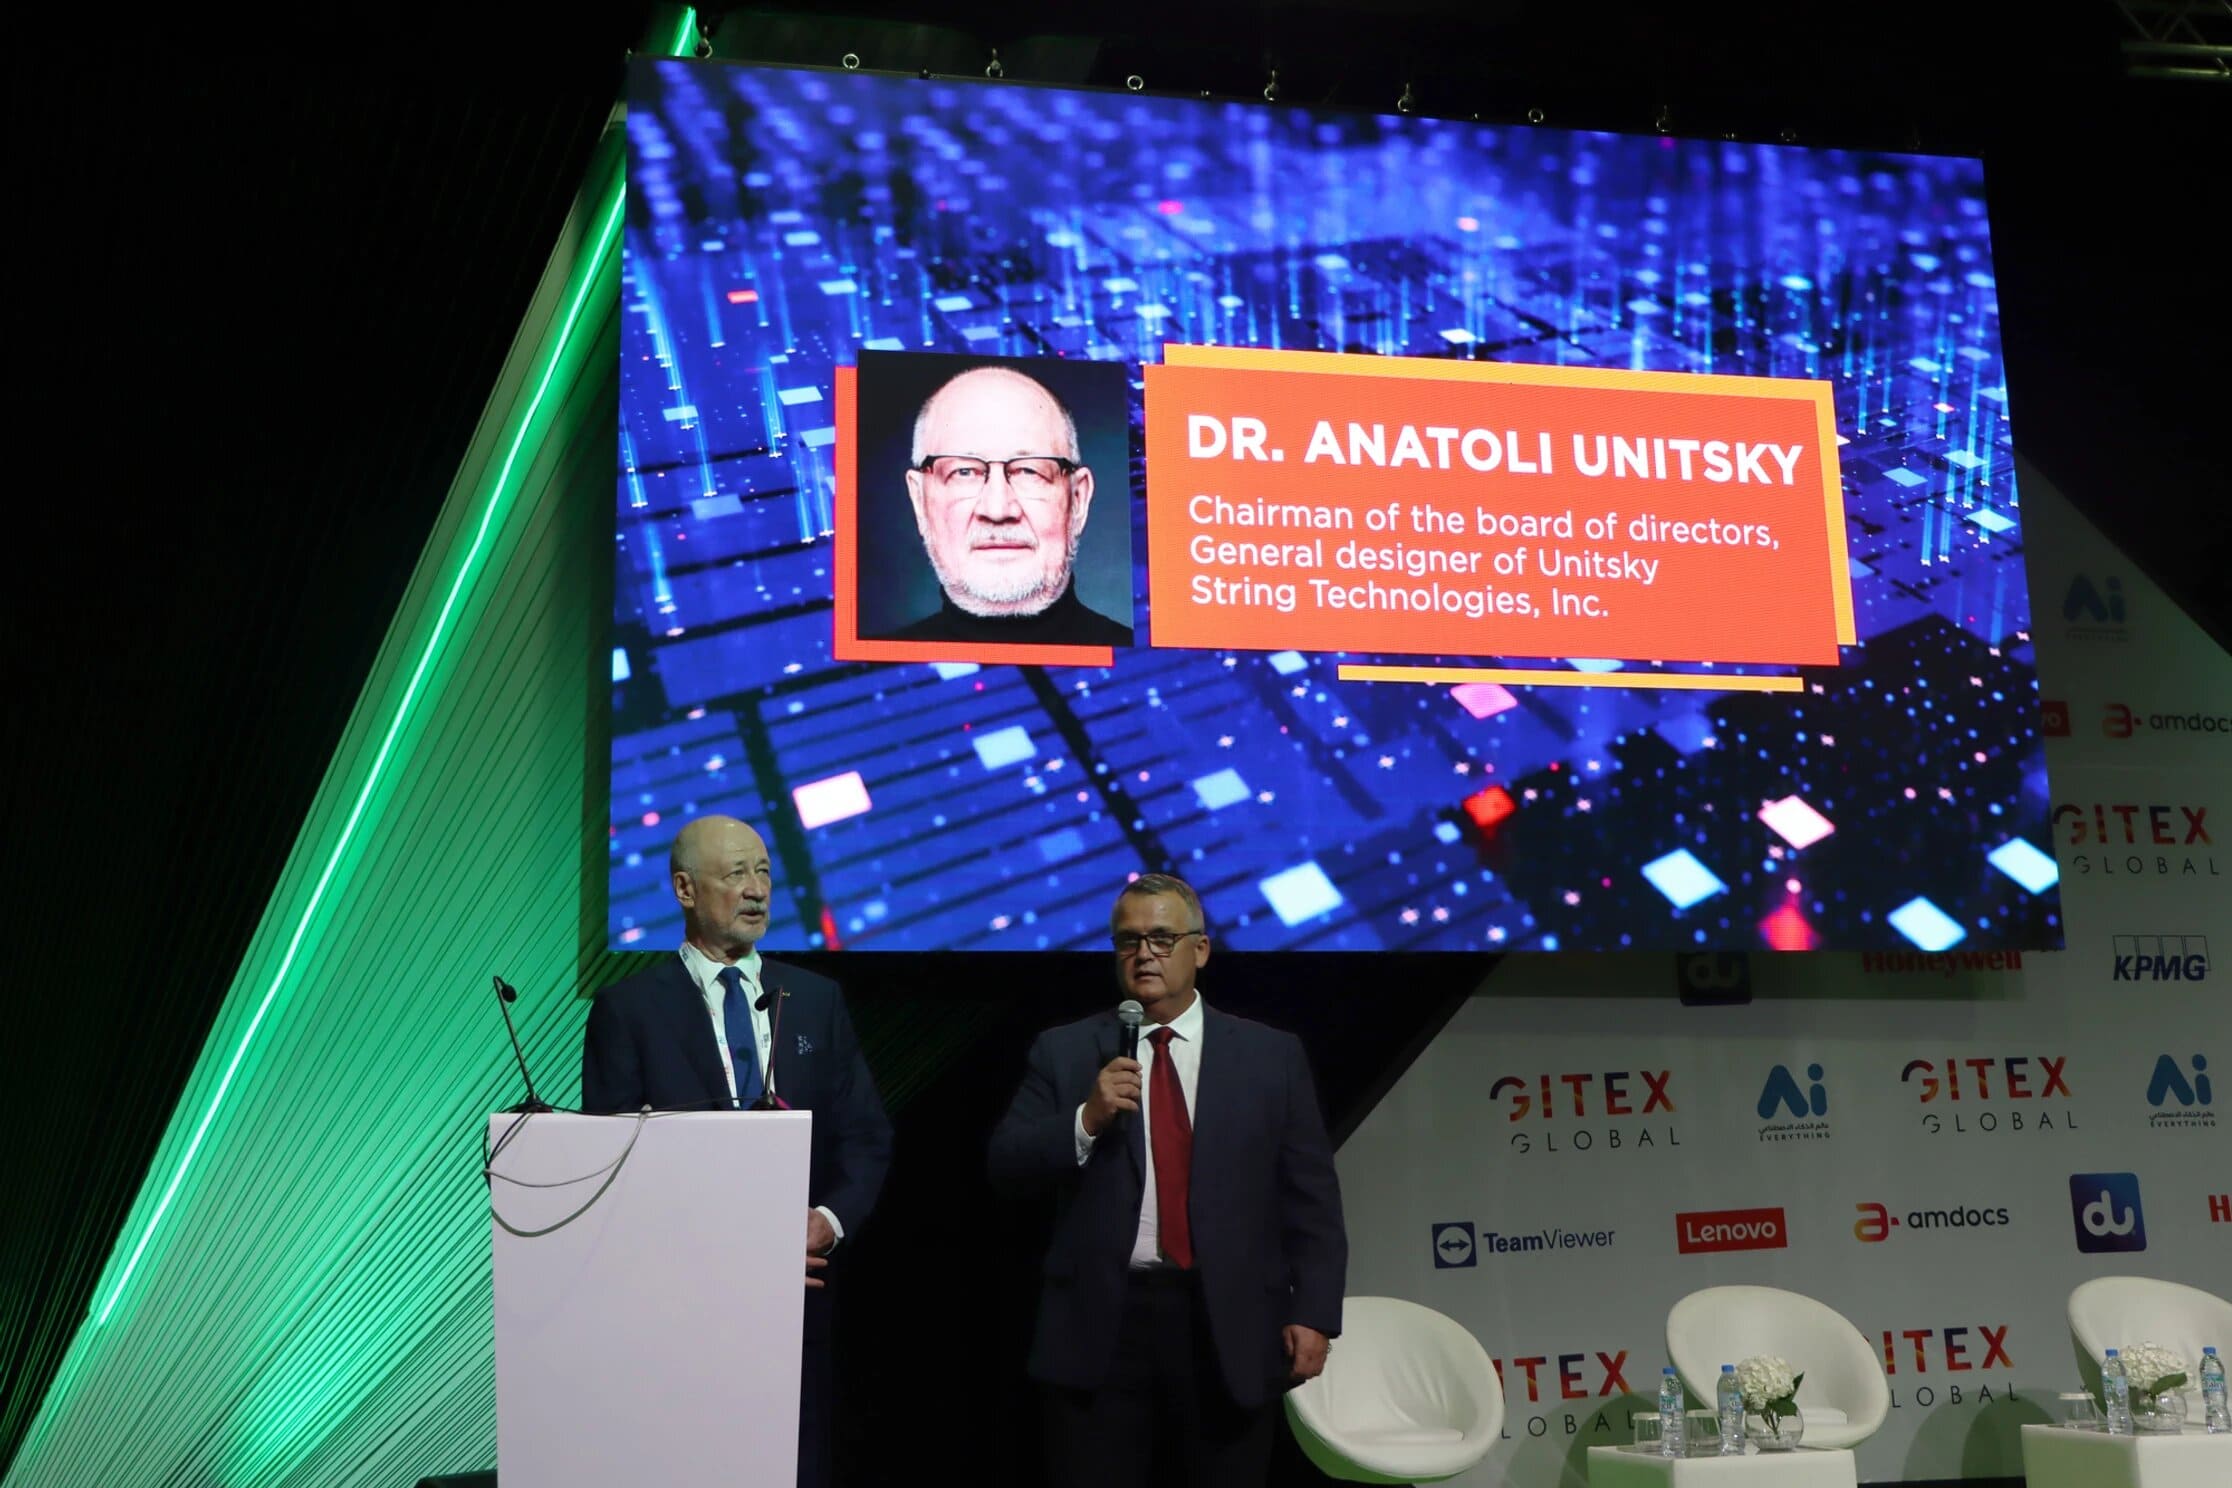 Dr. Anatoli Unitsky at GITEX